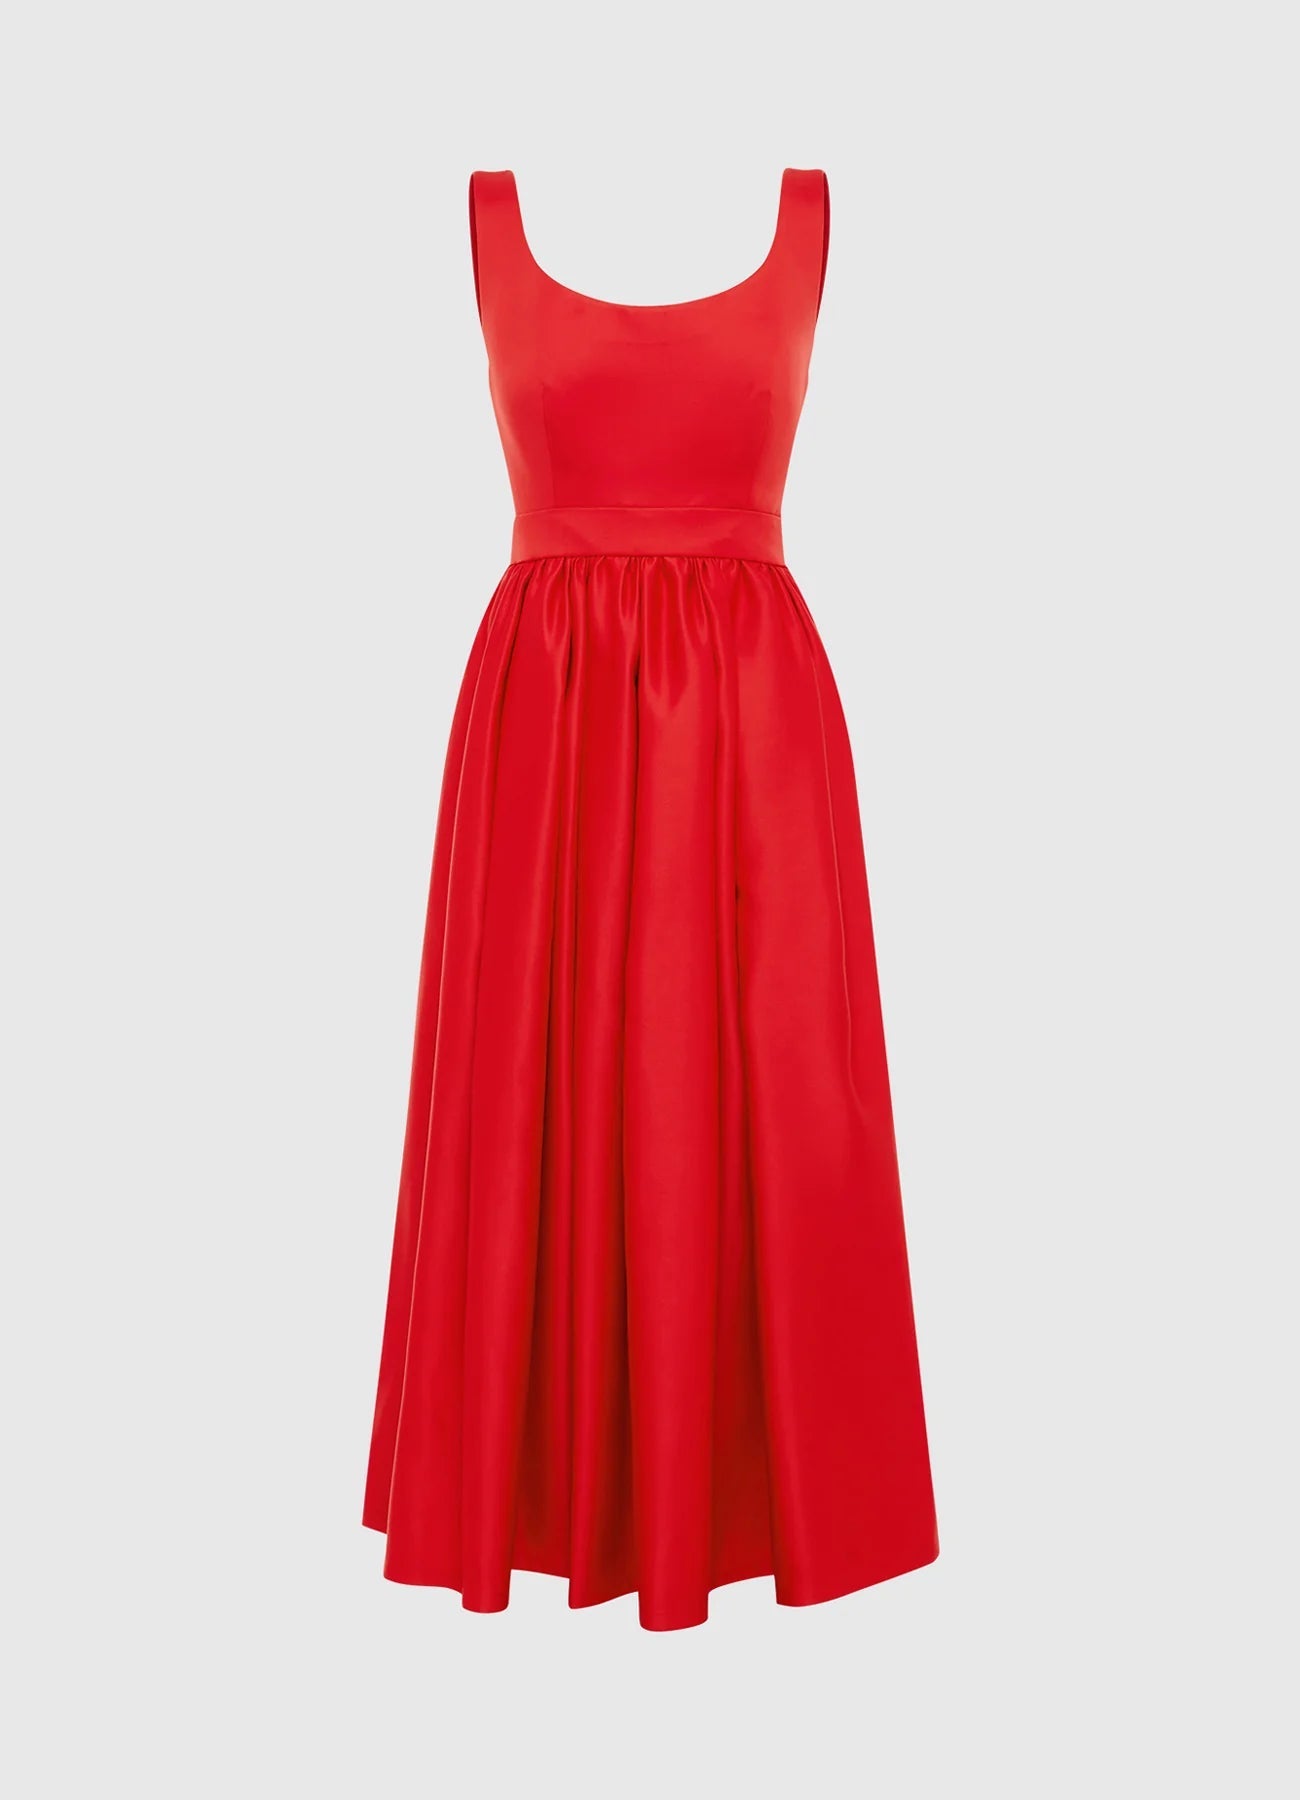 Leo Lin Colleen Midi Dress - Scarlet - Pinkhill, Darwin boutique, Australian high end fashion, Darwin Fashion